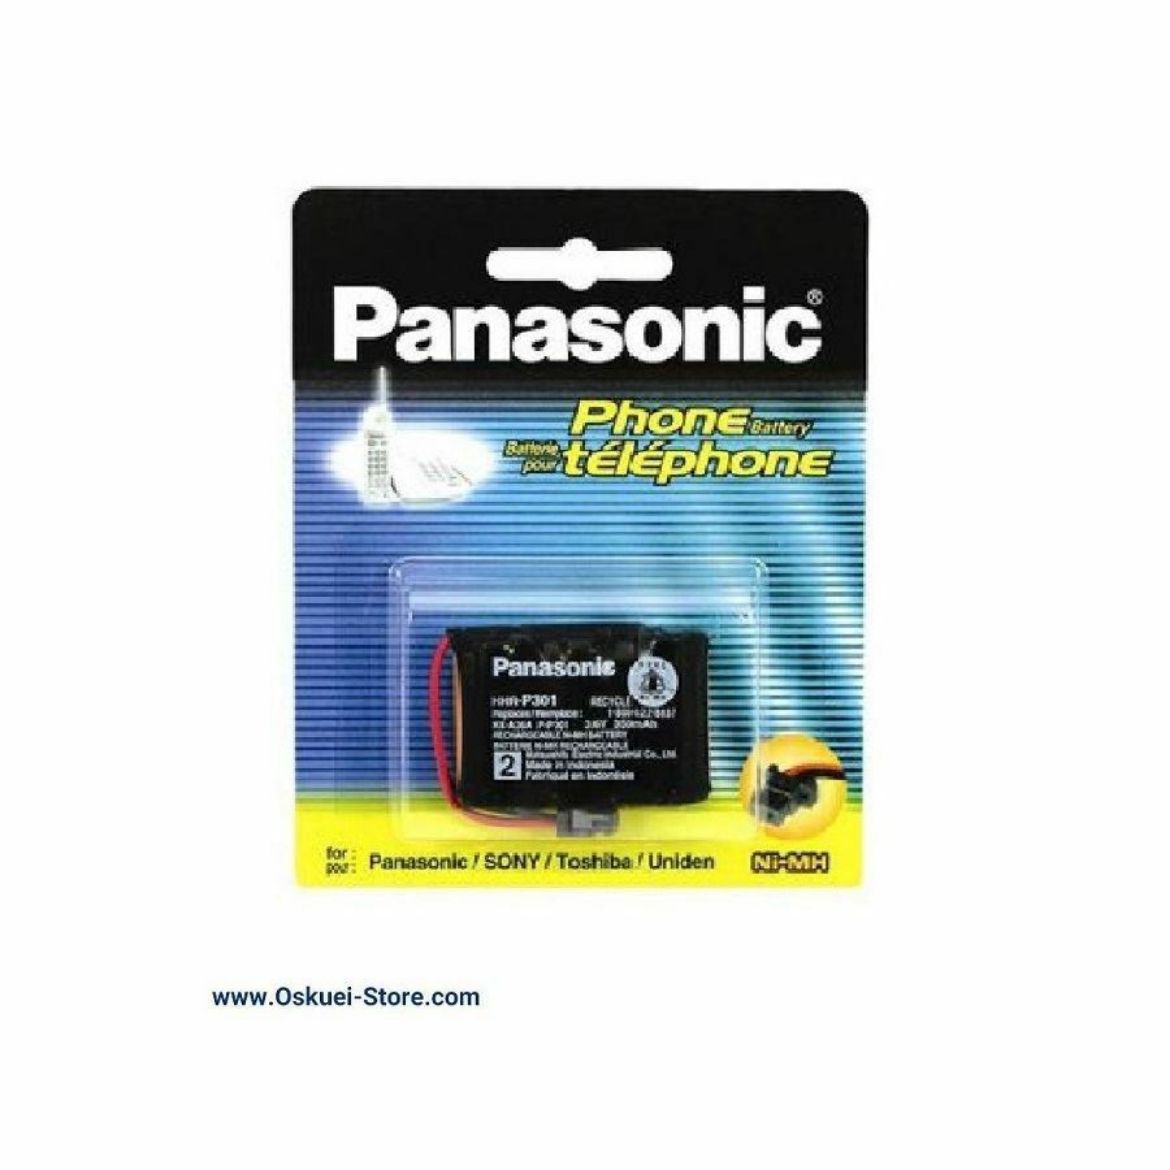 Panasonic HHR-P301 Batteries For Panasonic Cordless Telephones